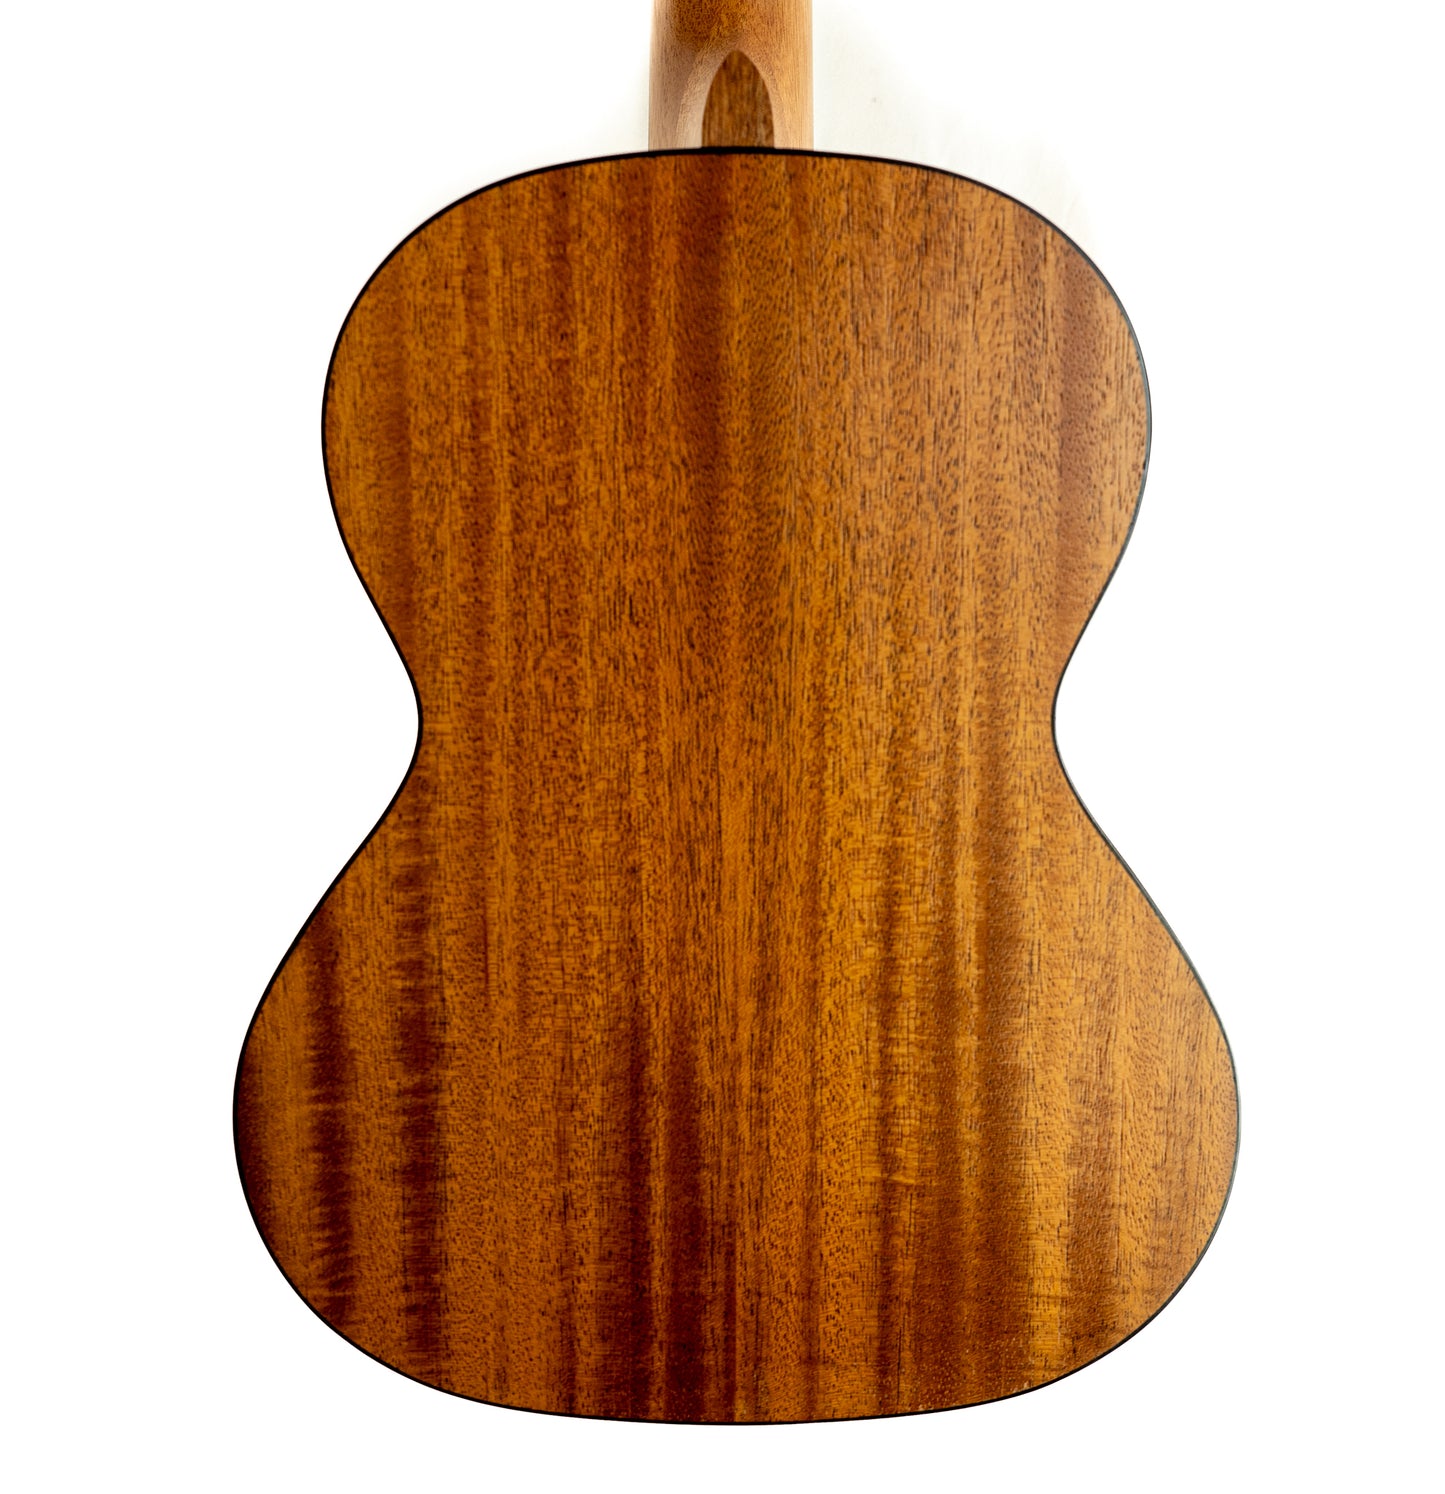 Kala KA-ST spruce top, mahogany sides and back ukulele, great tone and player!